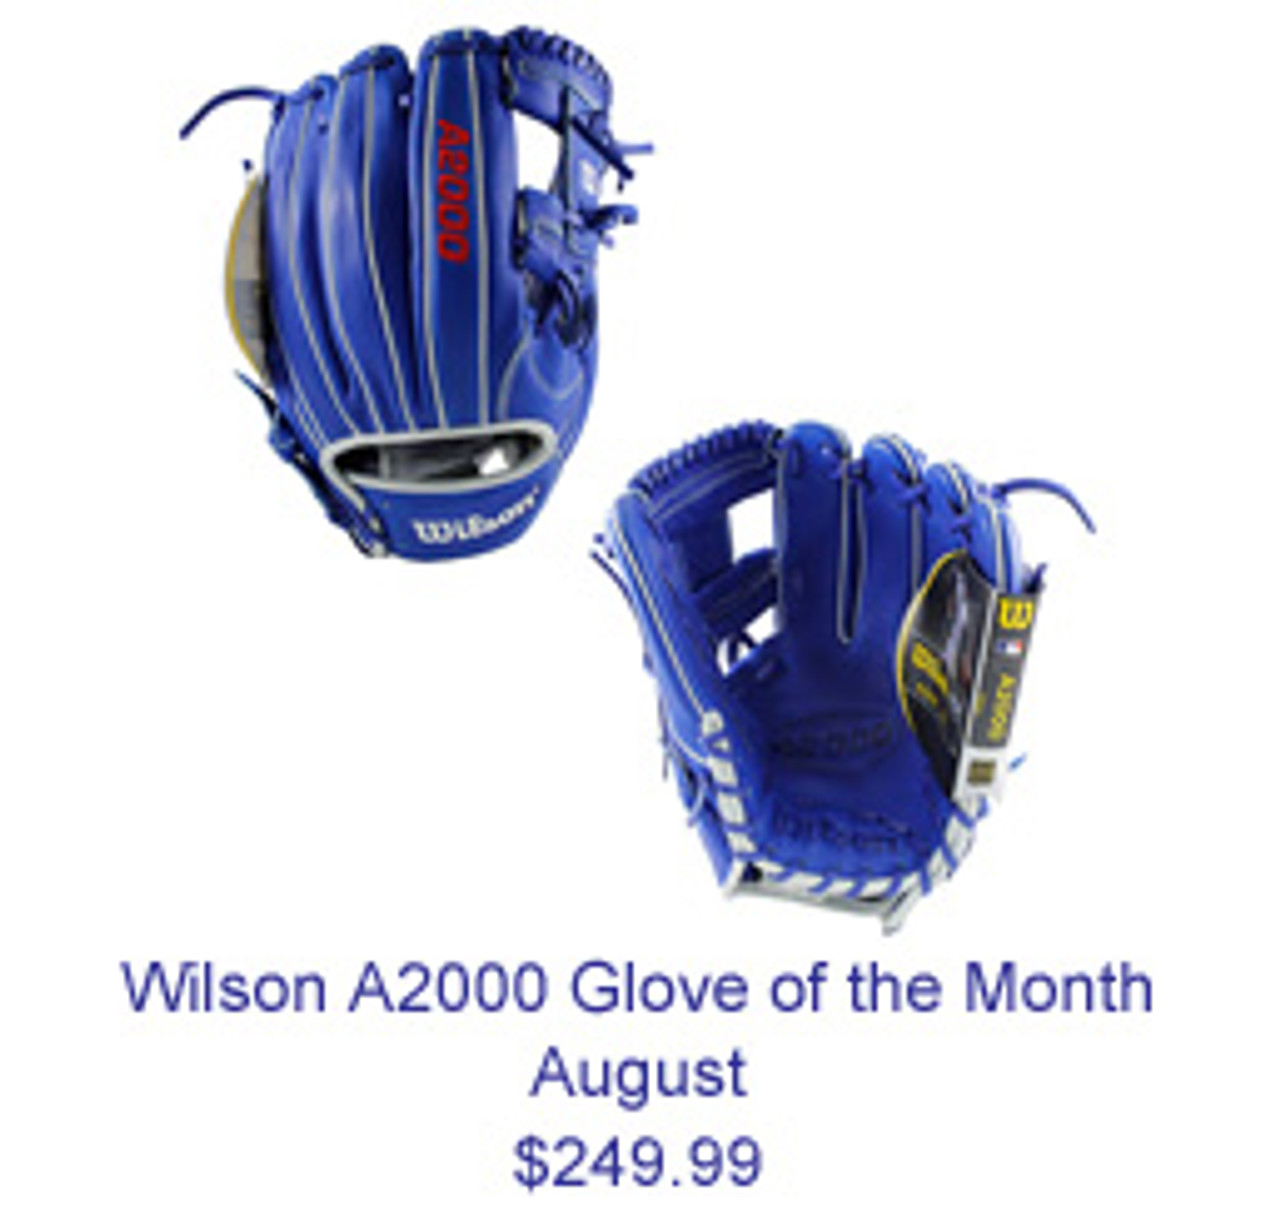 Wilson August 2013 Glove of the Month 1787 Hanley Ramirez Model